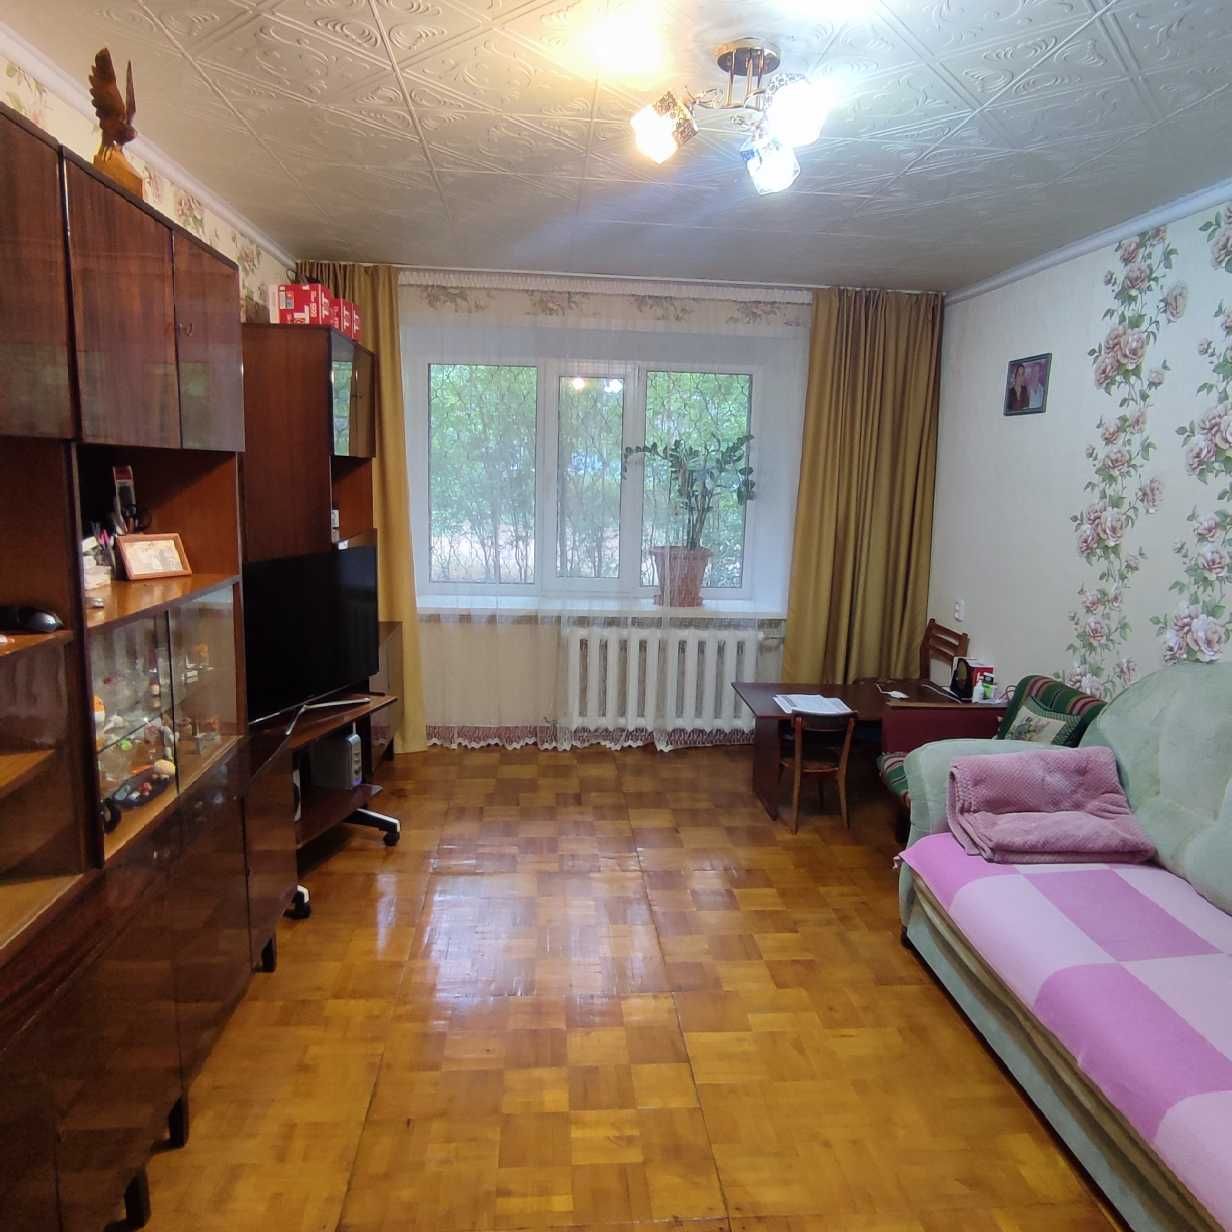 1203 Продается 3х комнатная квартира У/П за ТД "Алтын-Арай"